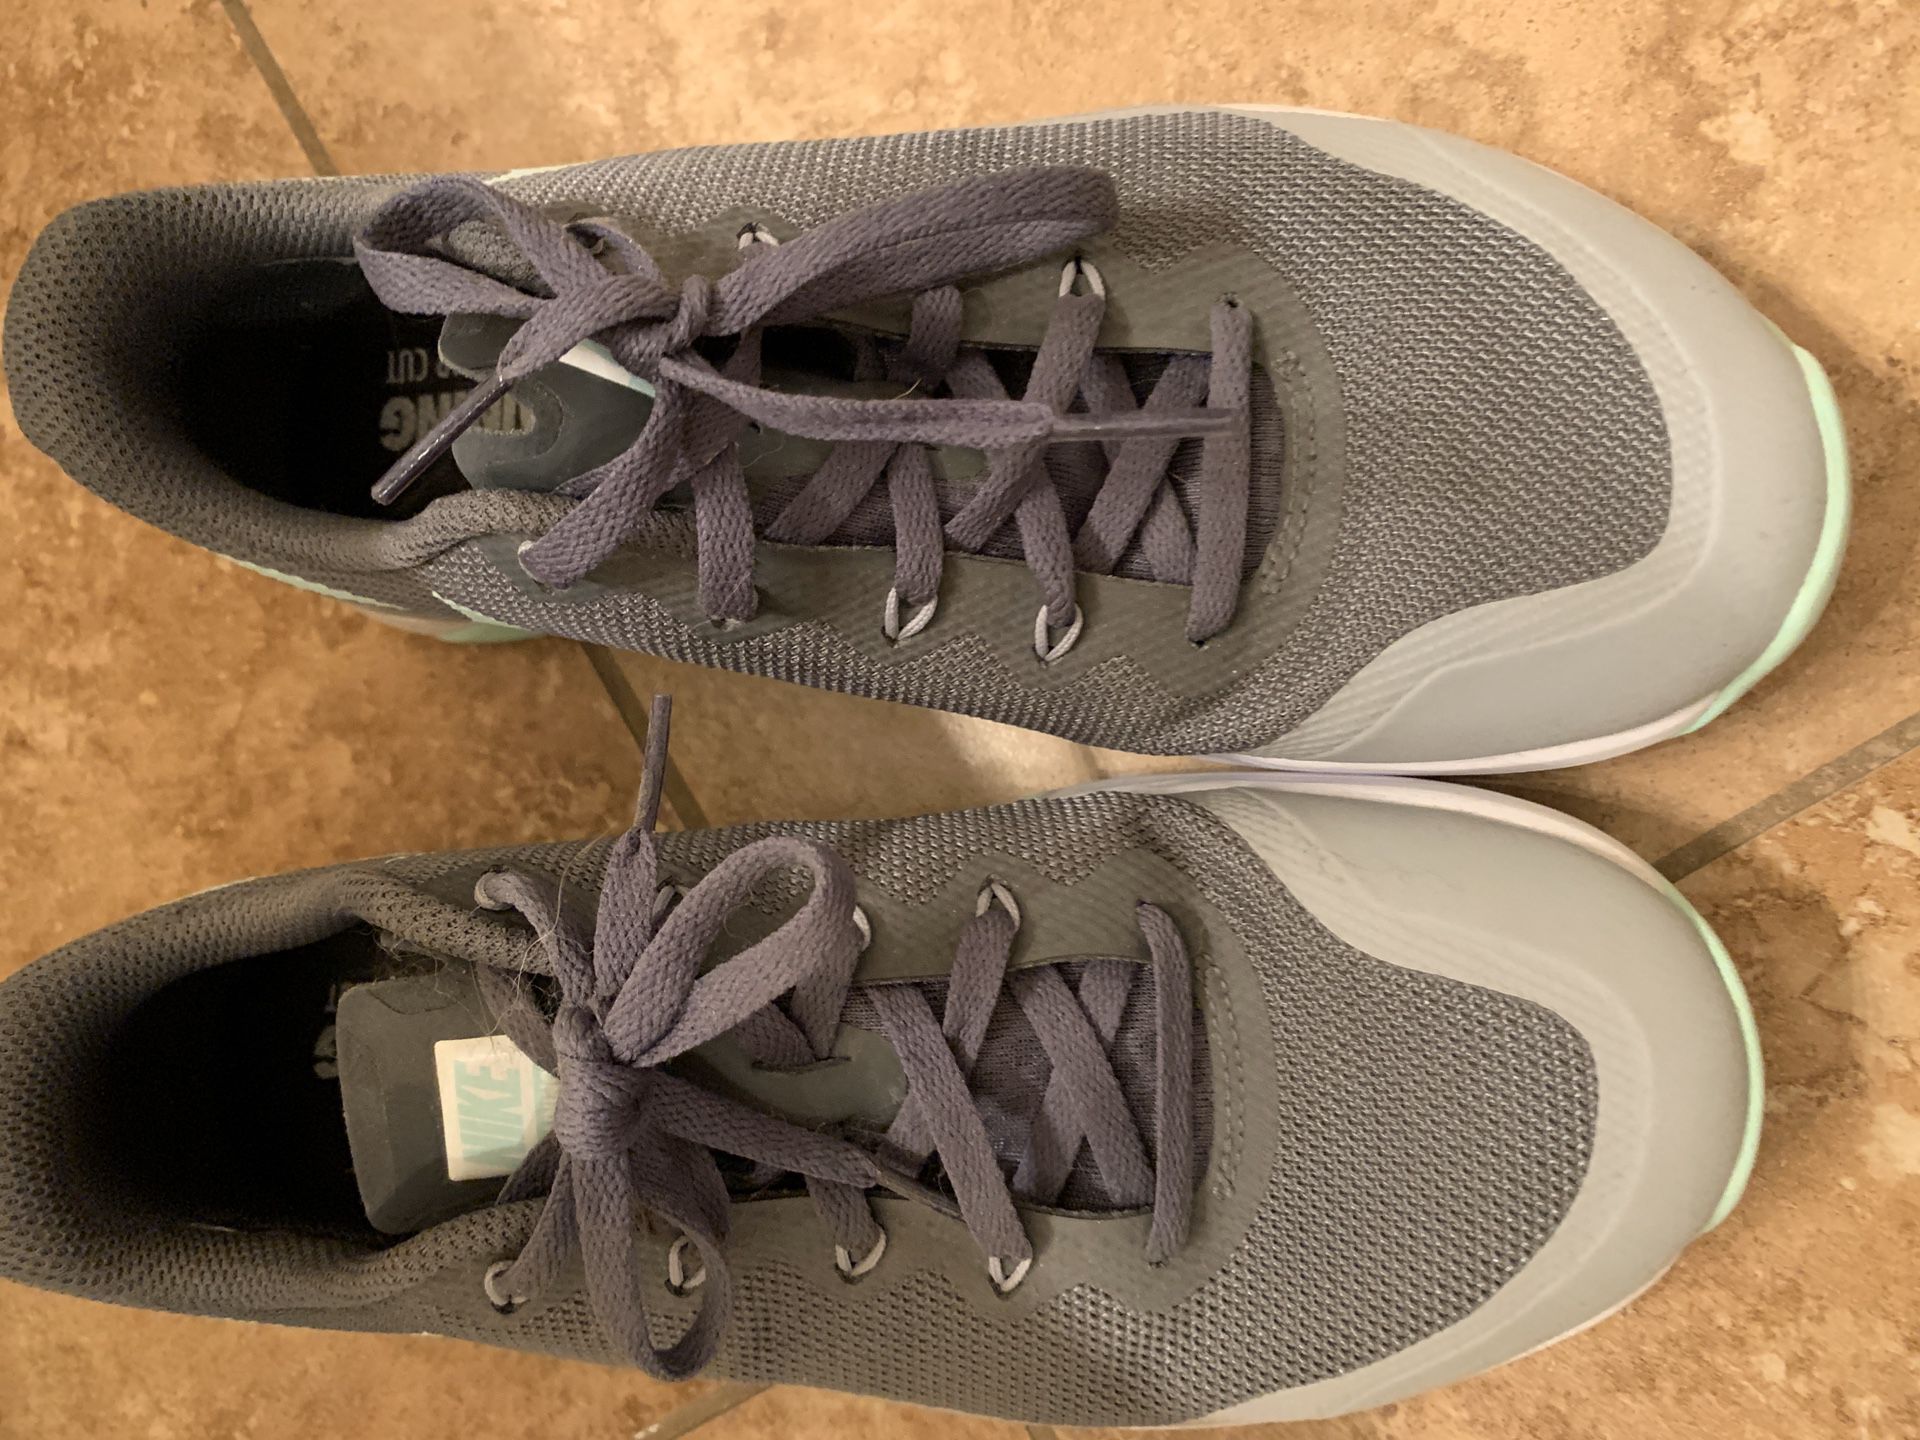 Gray, Nike Training shoes